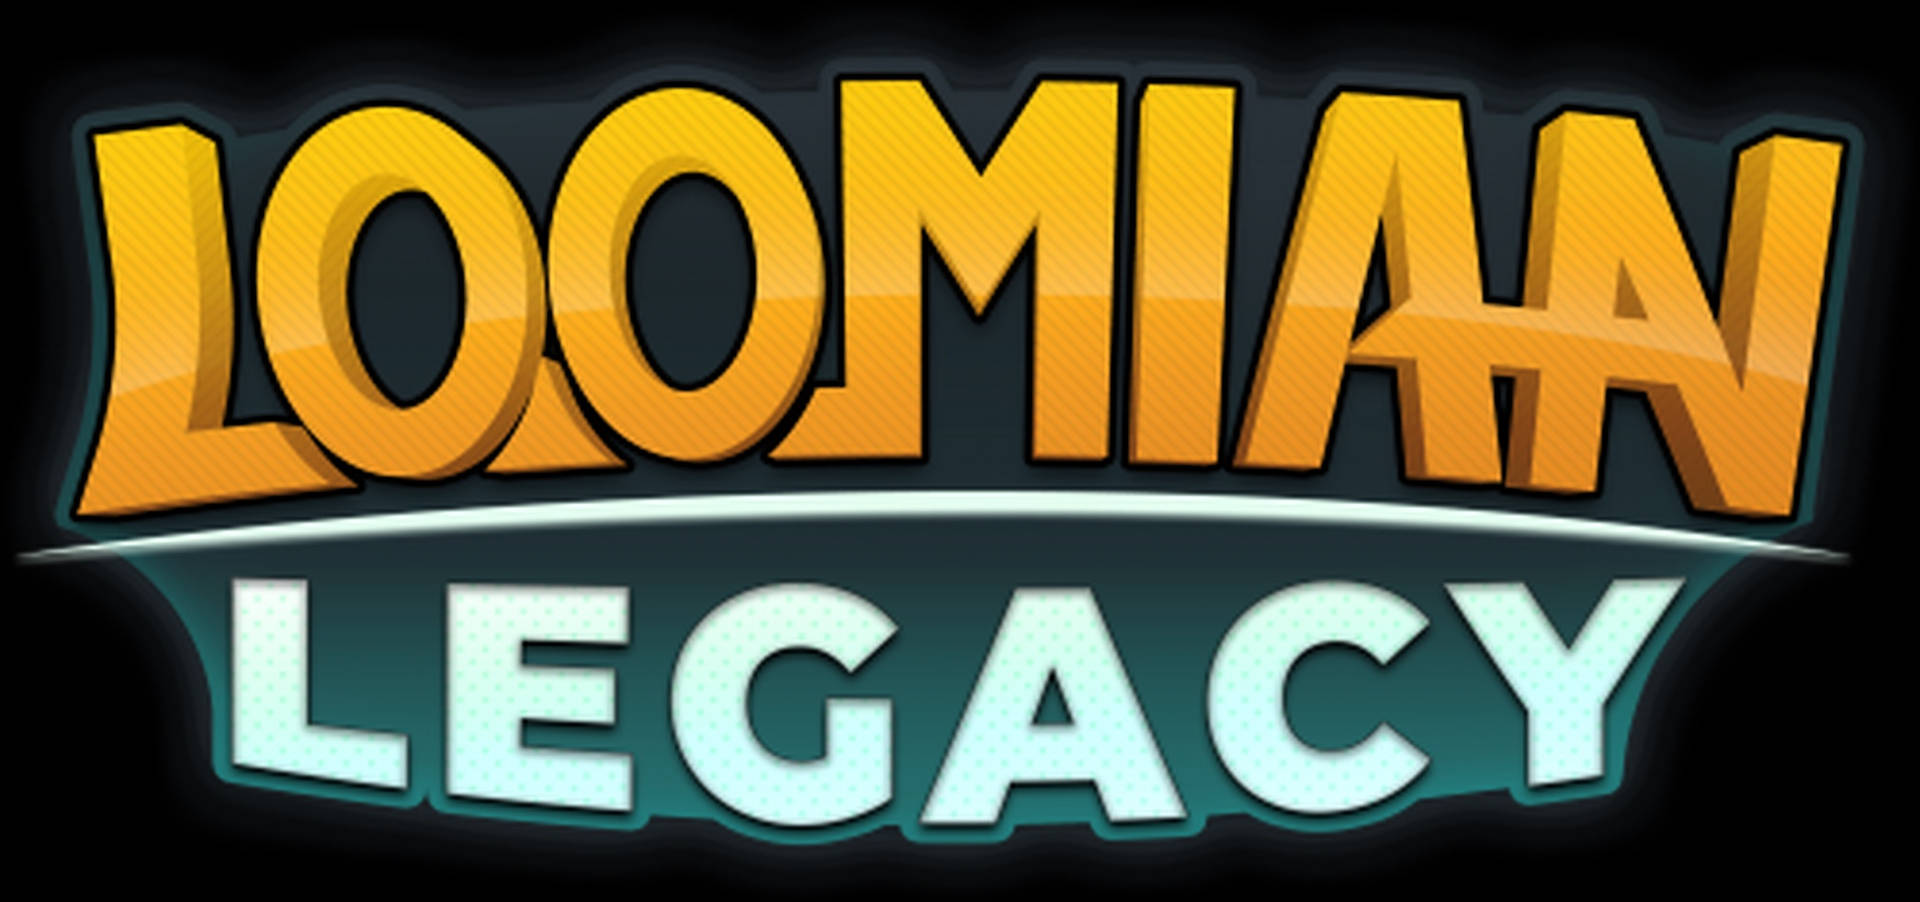 Loomian Legacy Logo